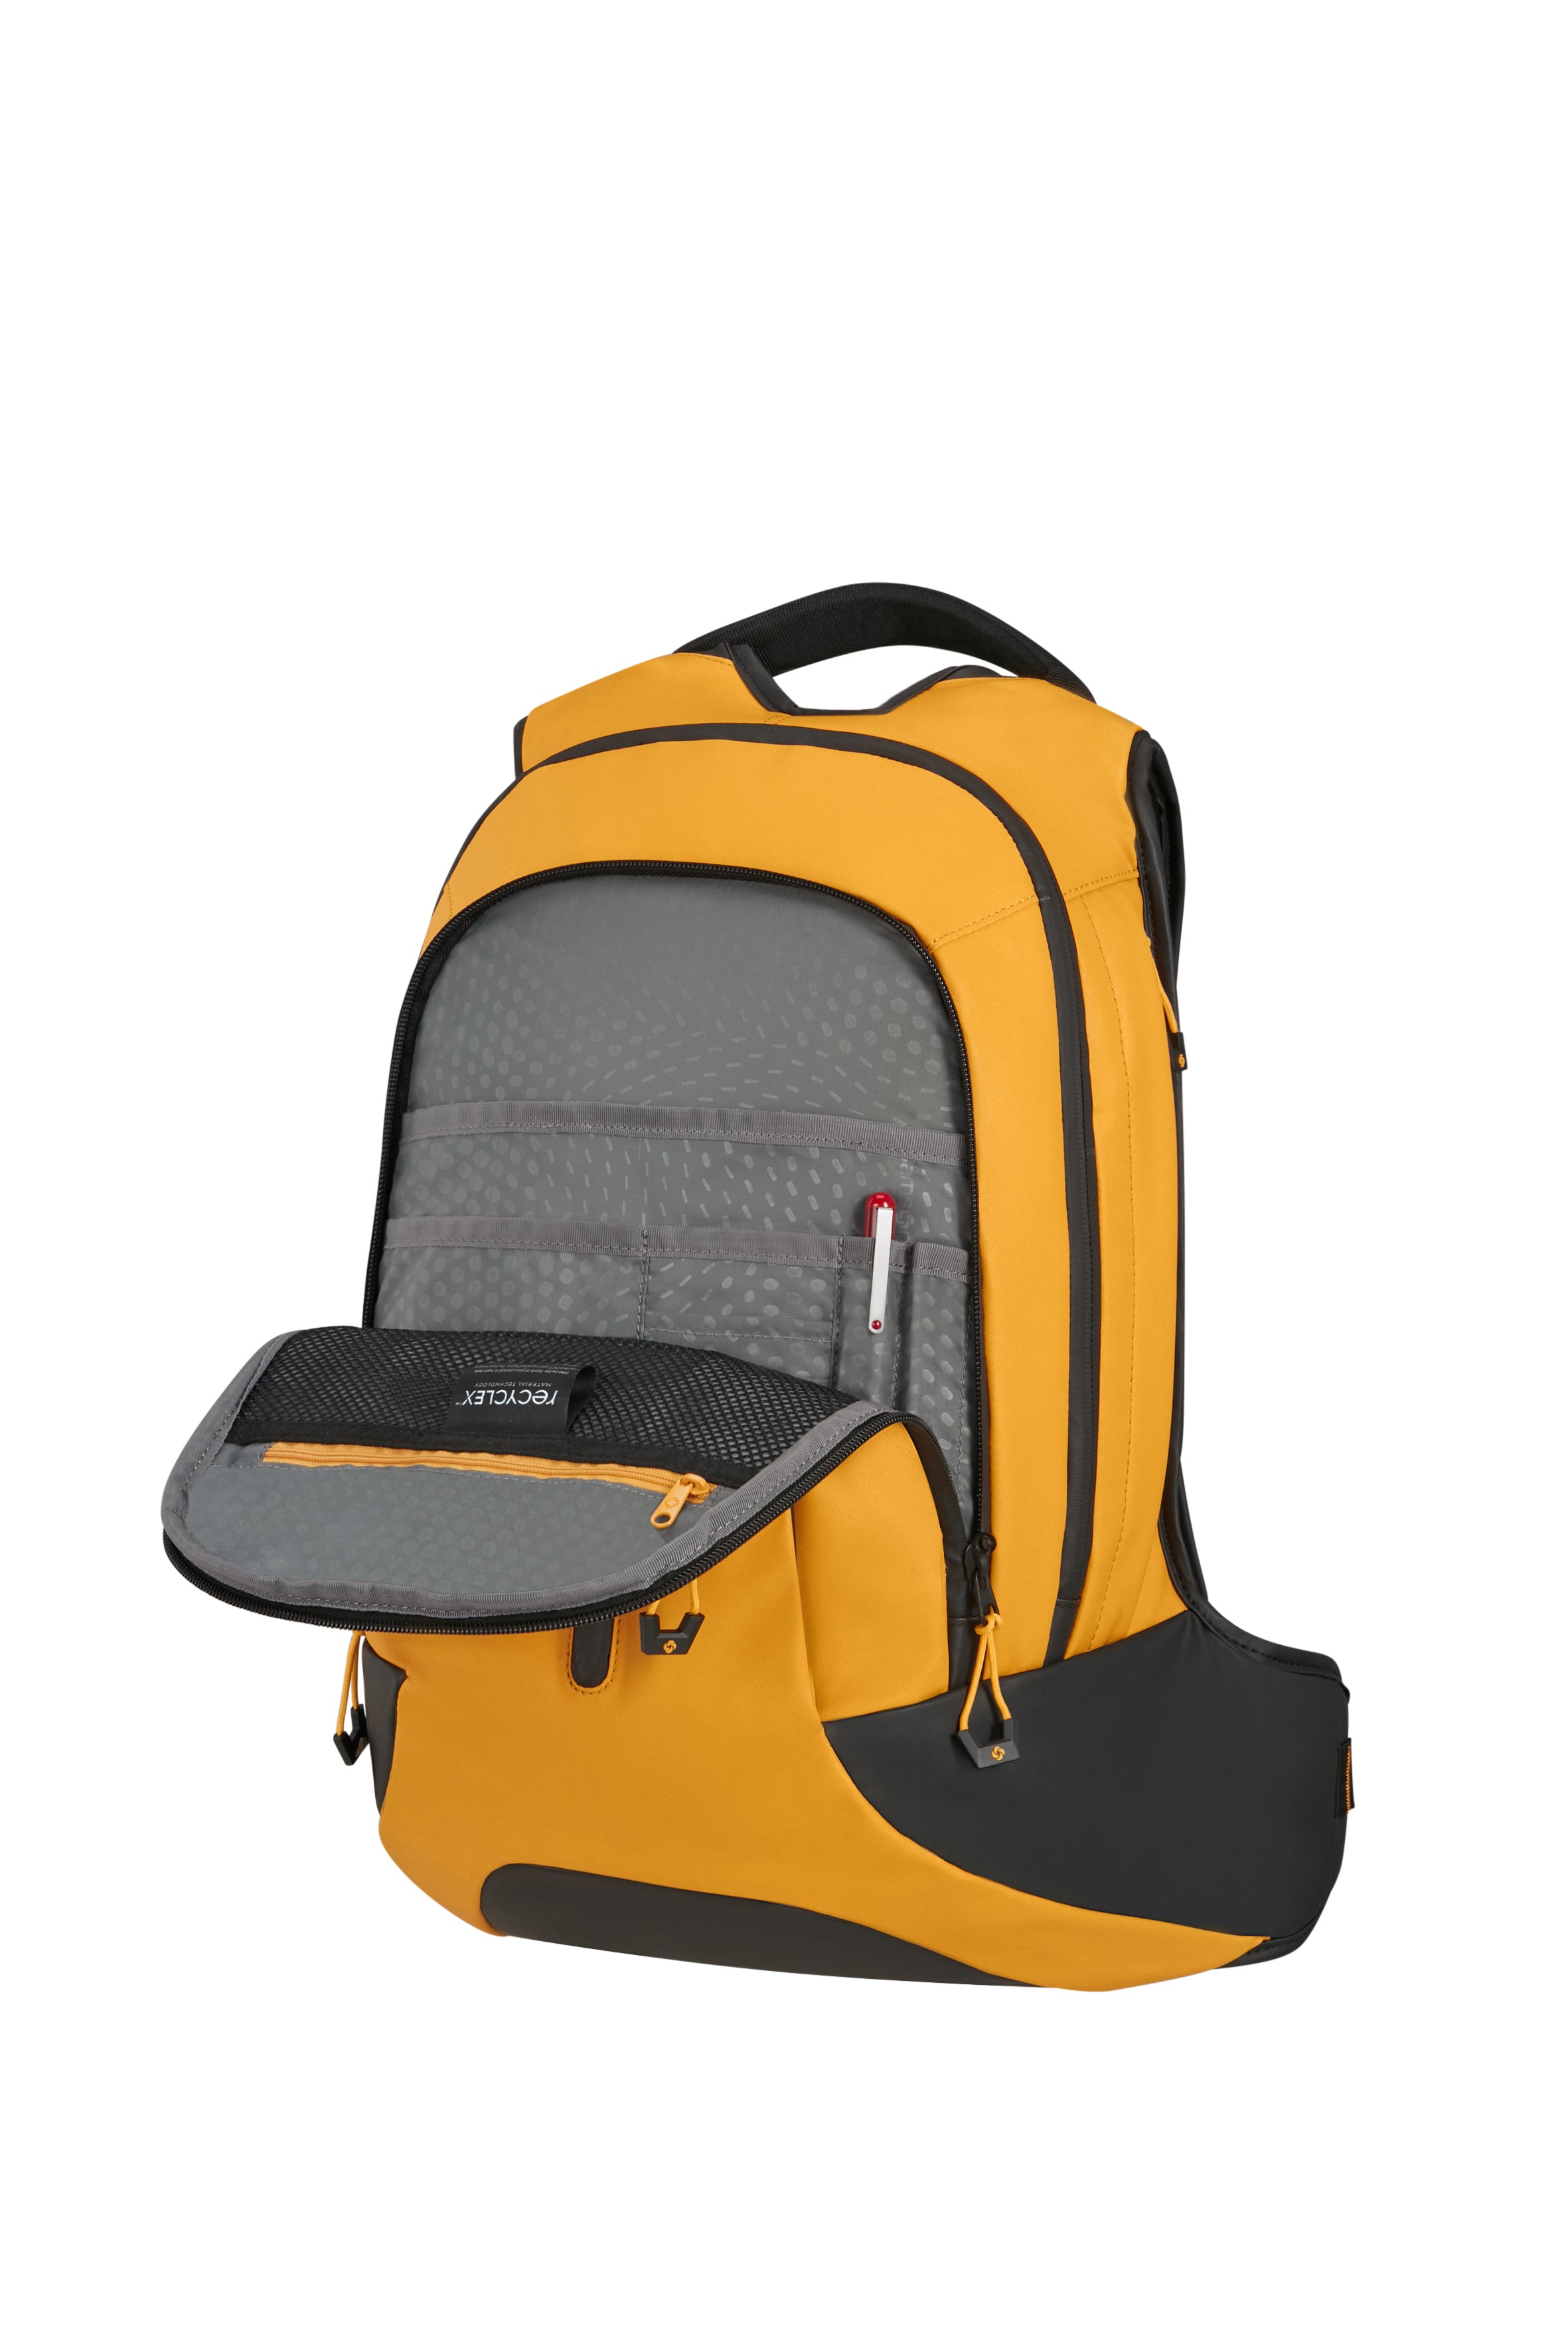 Samsonite Ecodiver Laptop Backpack Medium